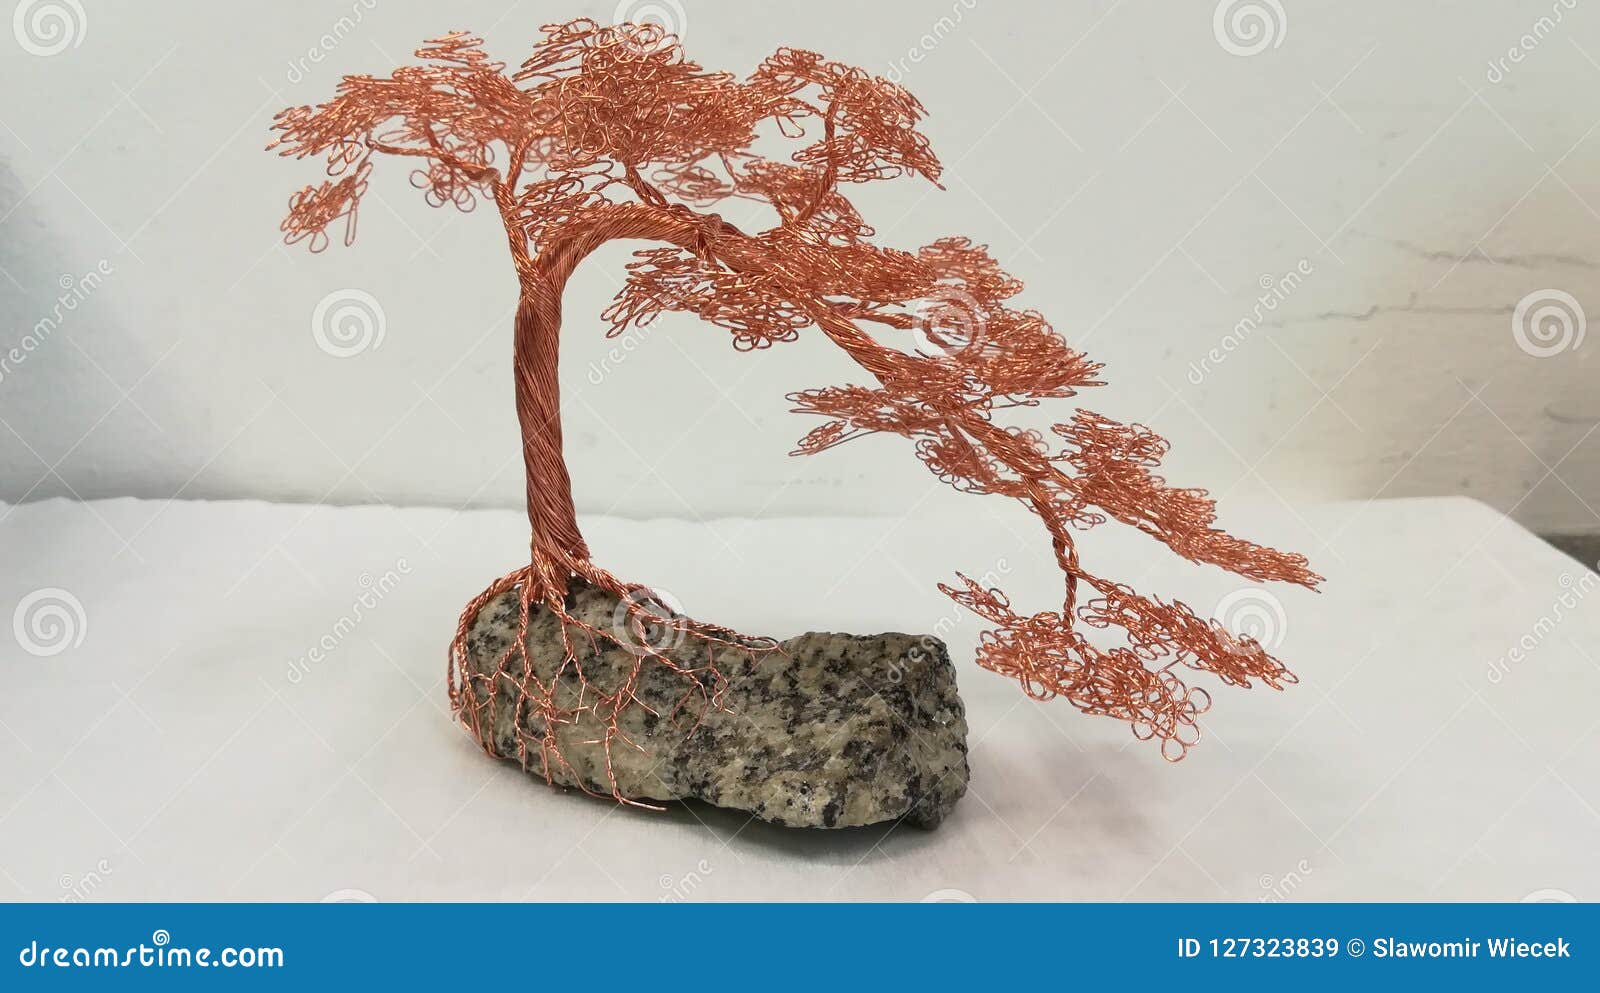 Copper Wire Bonsai Tree On A Stone Editorial Stock Image Image Of Tree Bonsai 127323839